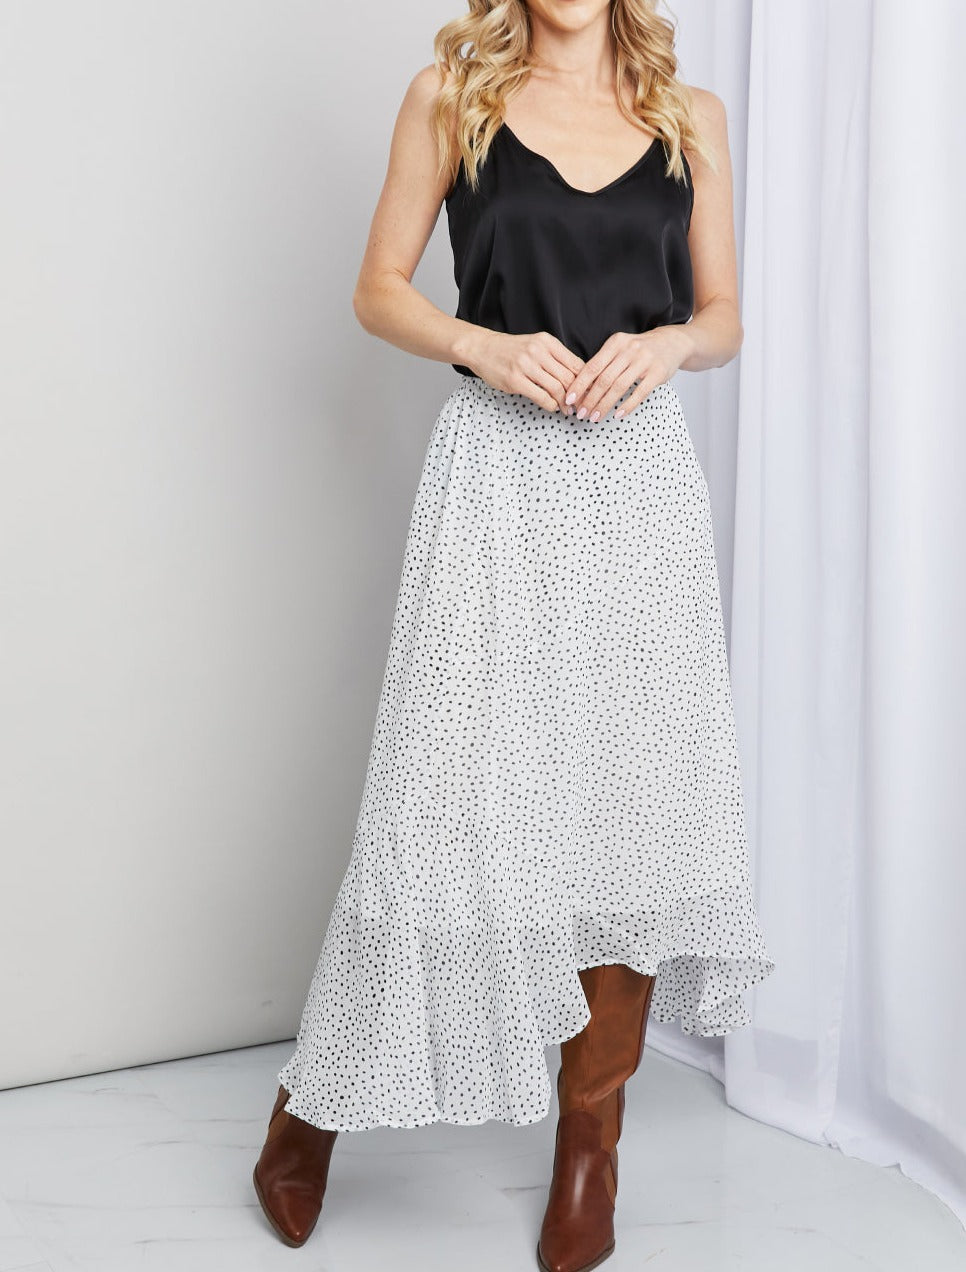 Zenana Polka Dot Ruffle Hem Midi Skirt in Ivory/Black - Cheeky Chic Boutique